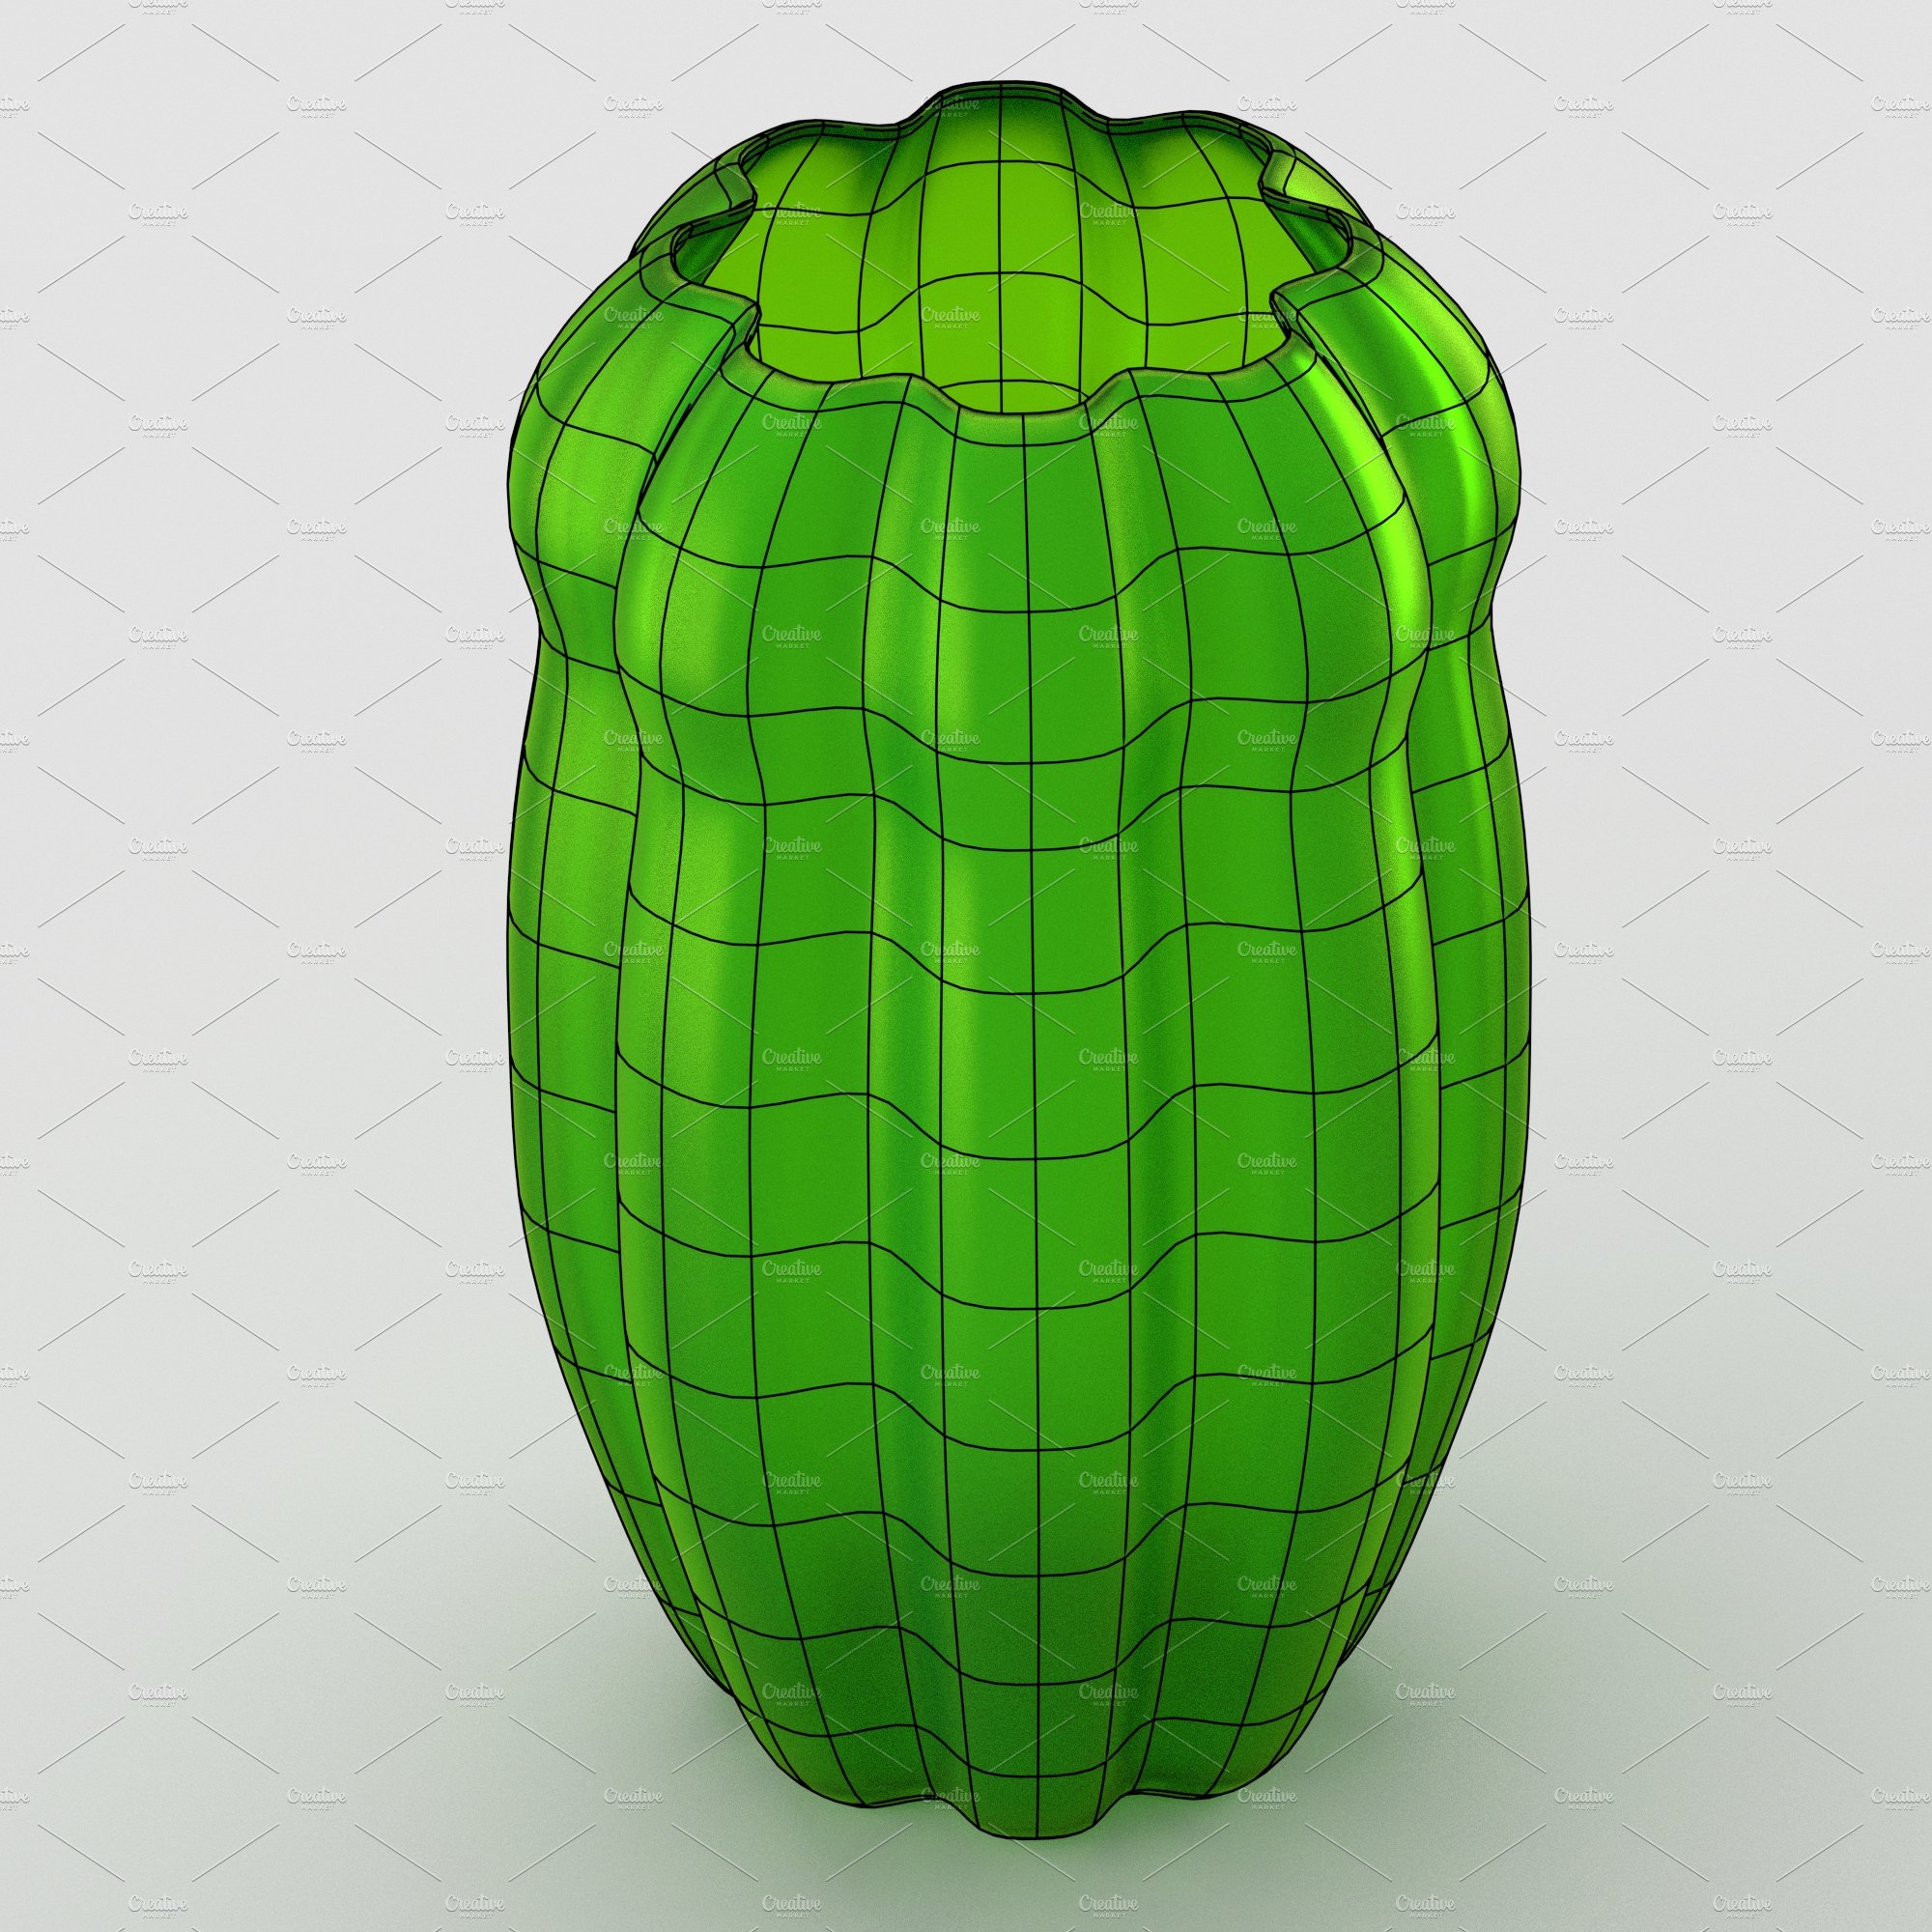 Decorative matte glass vase preview image.